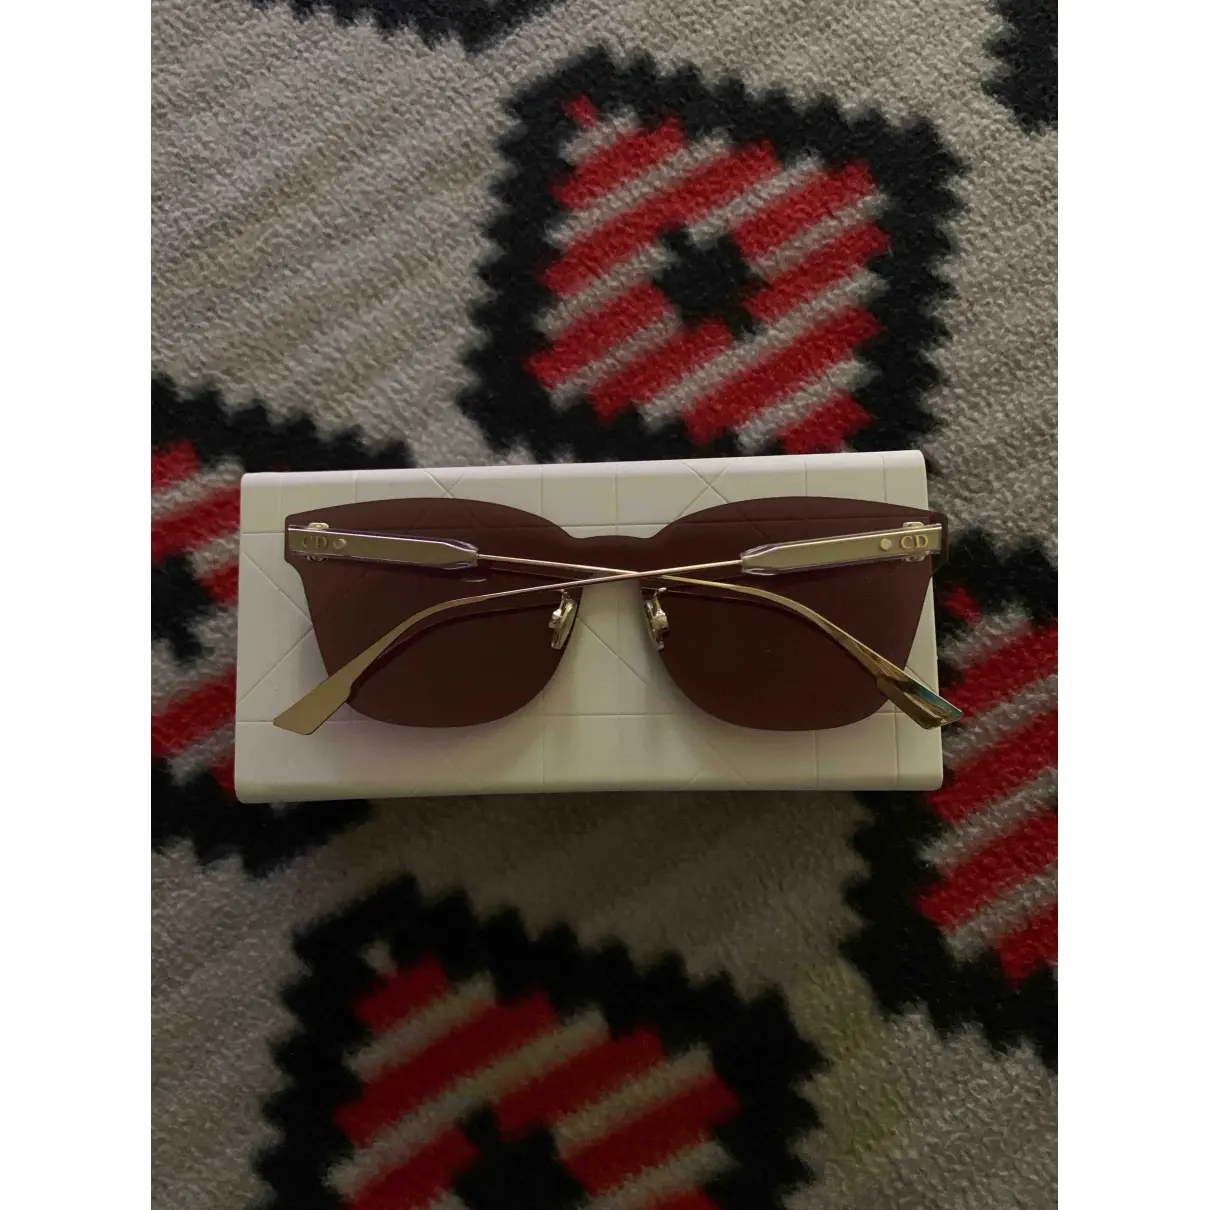 Buy Dior Color Quake 2 sunglasses online